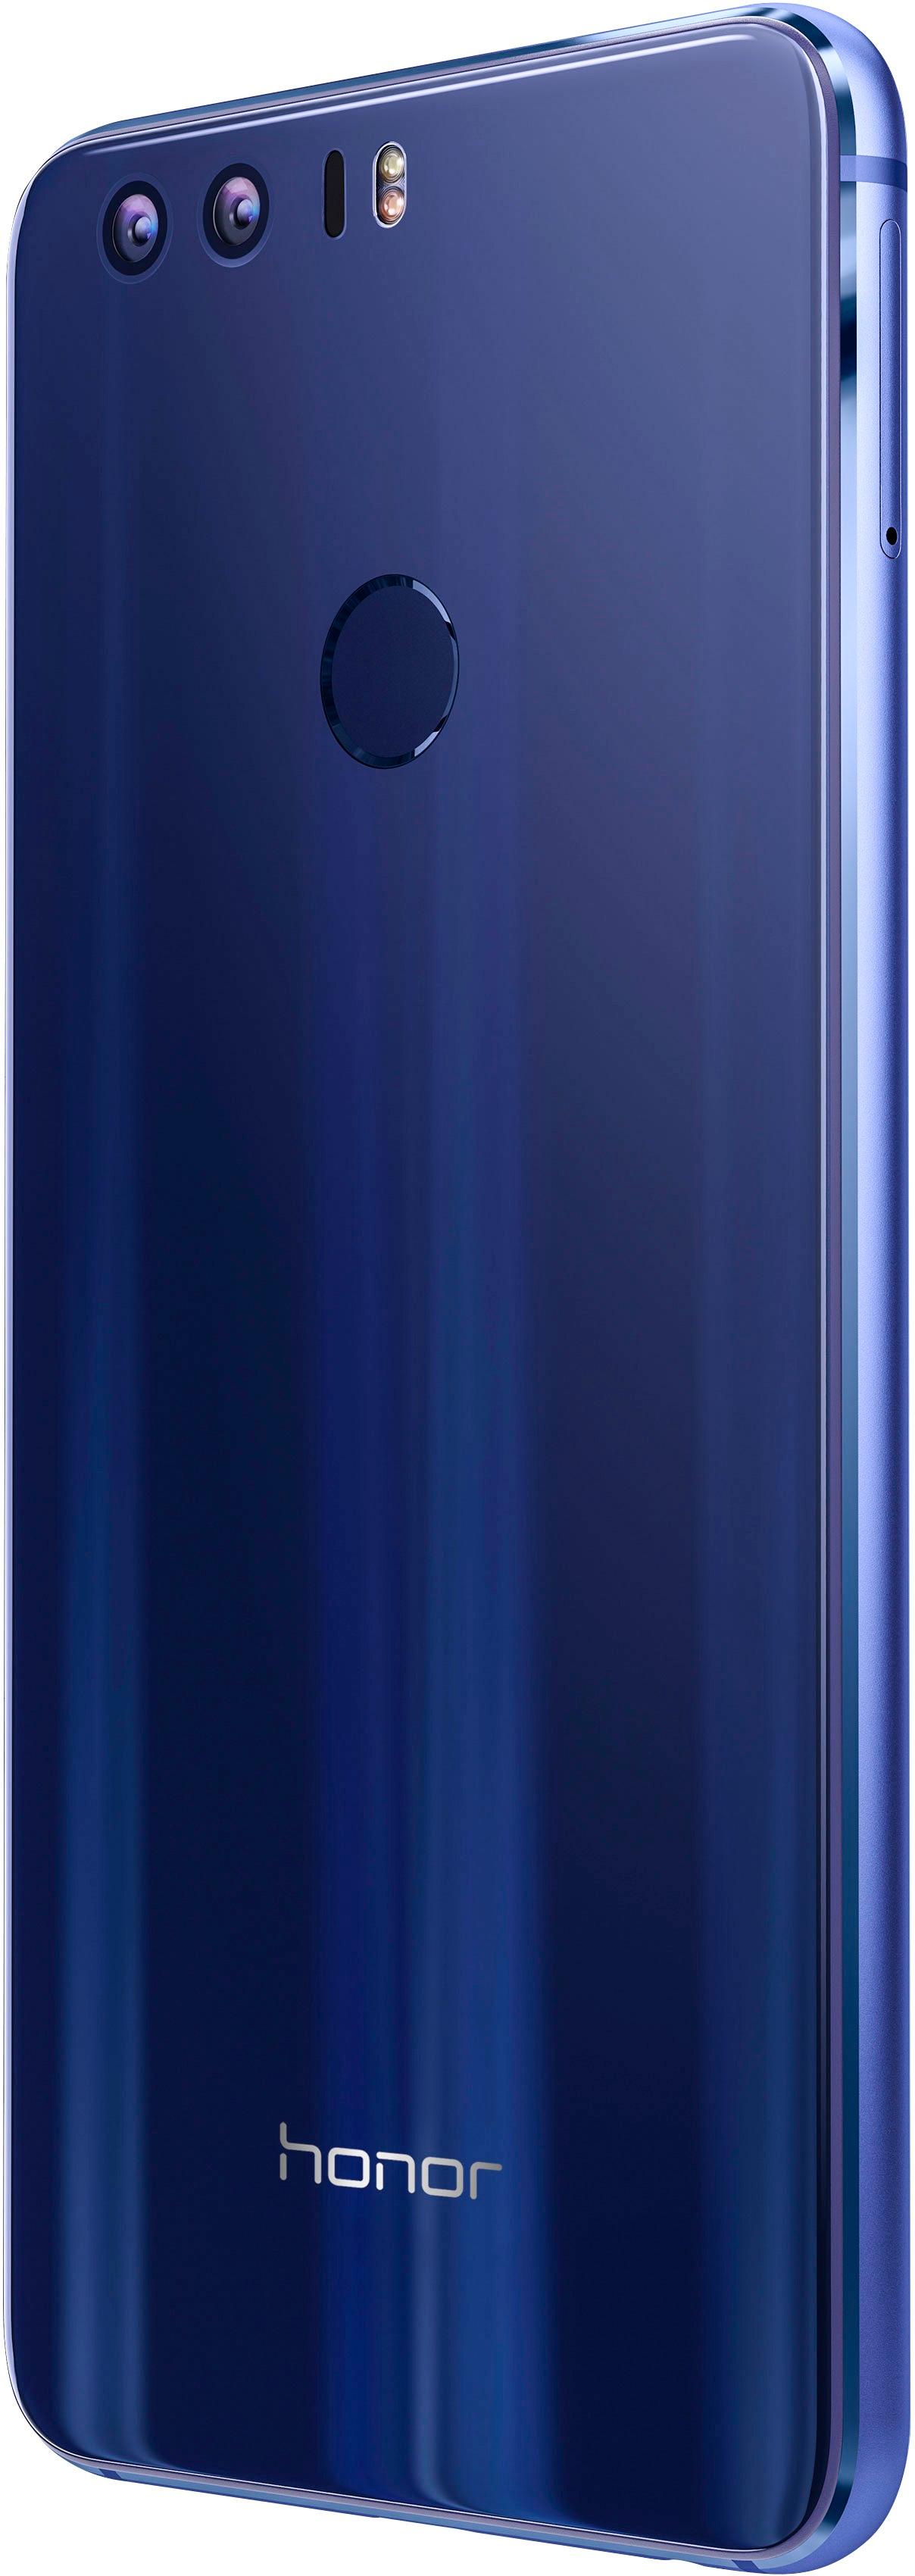 Pelagisch handel lijden Best Buy: Huawei Honor 8 4G LTE with 64GB Memory Cell Phone (Unlocked)  Sapphire blue FRD-L14